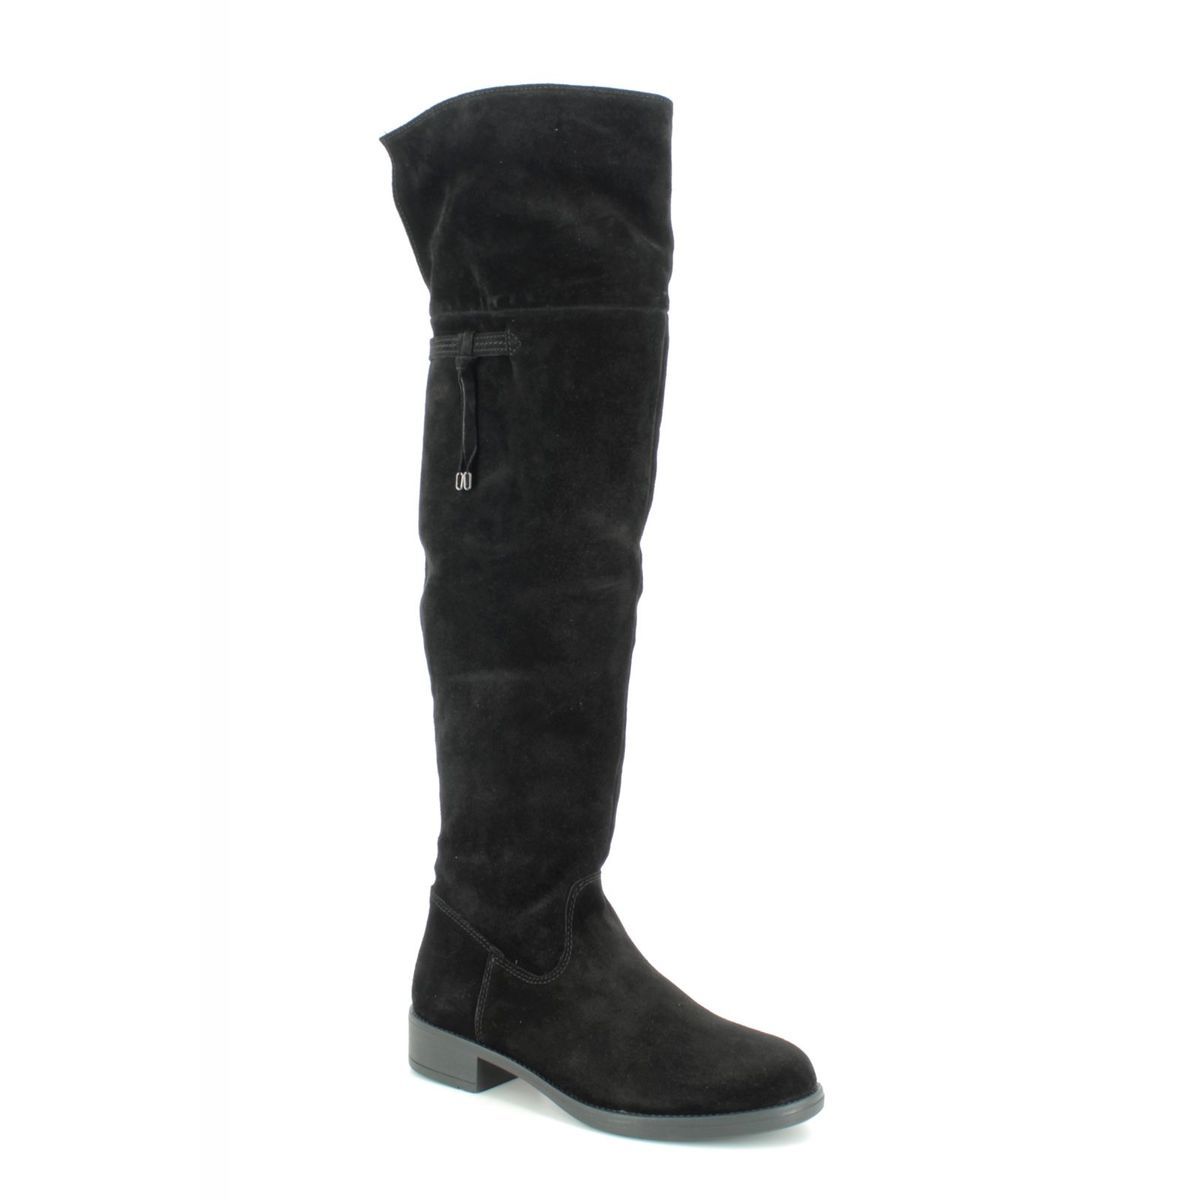 Tamaris Taina Over Knee 25537-23-001 Black suede knee-high boots